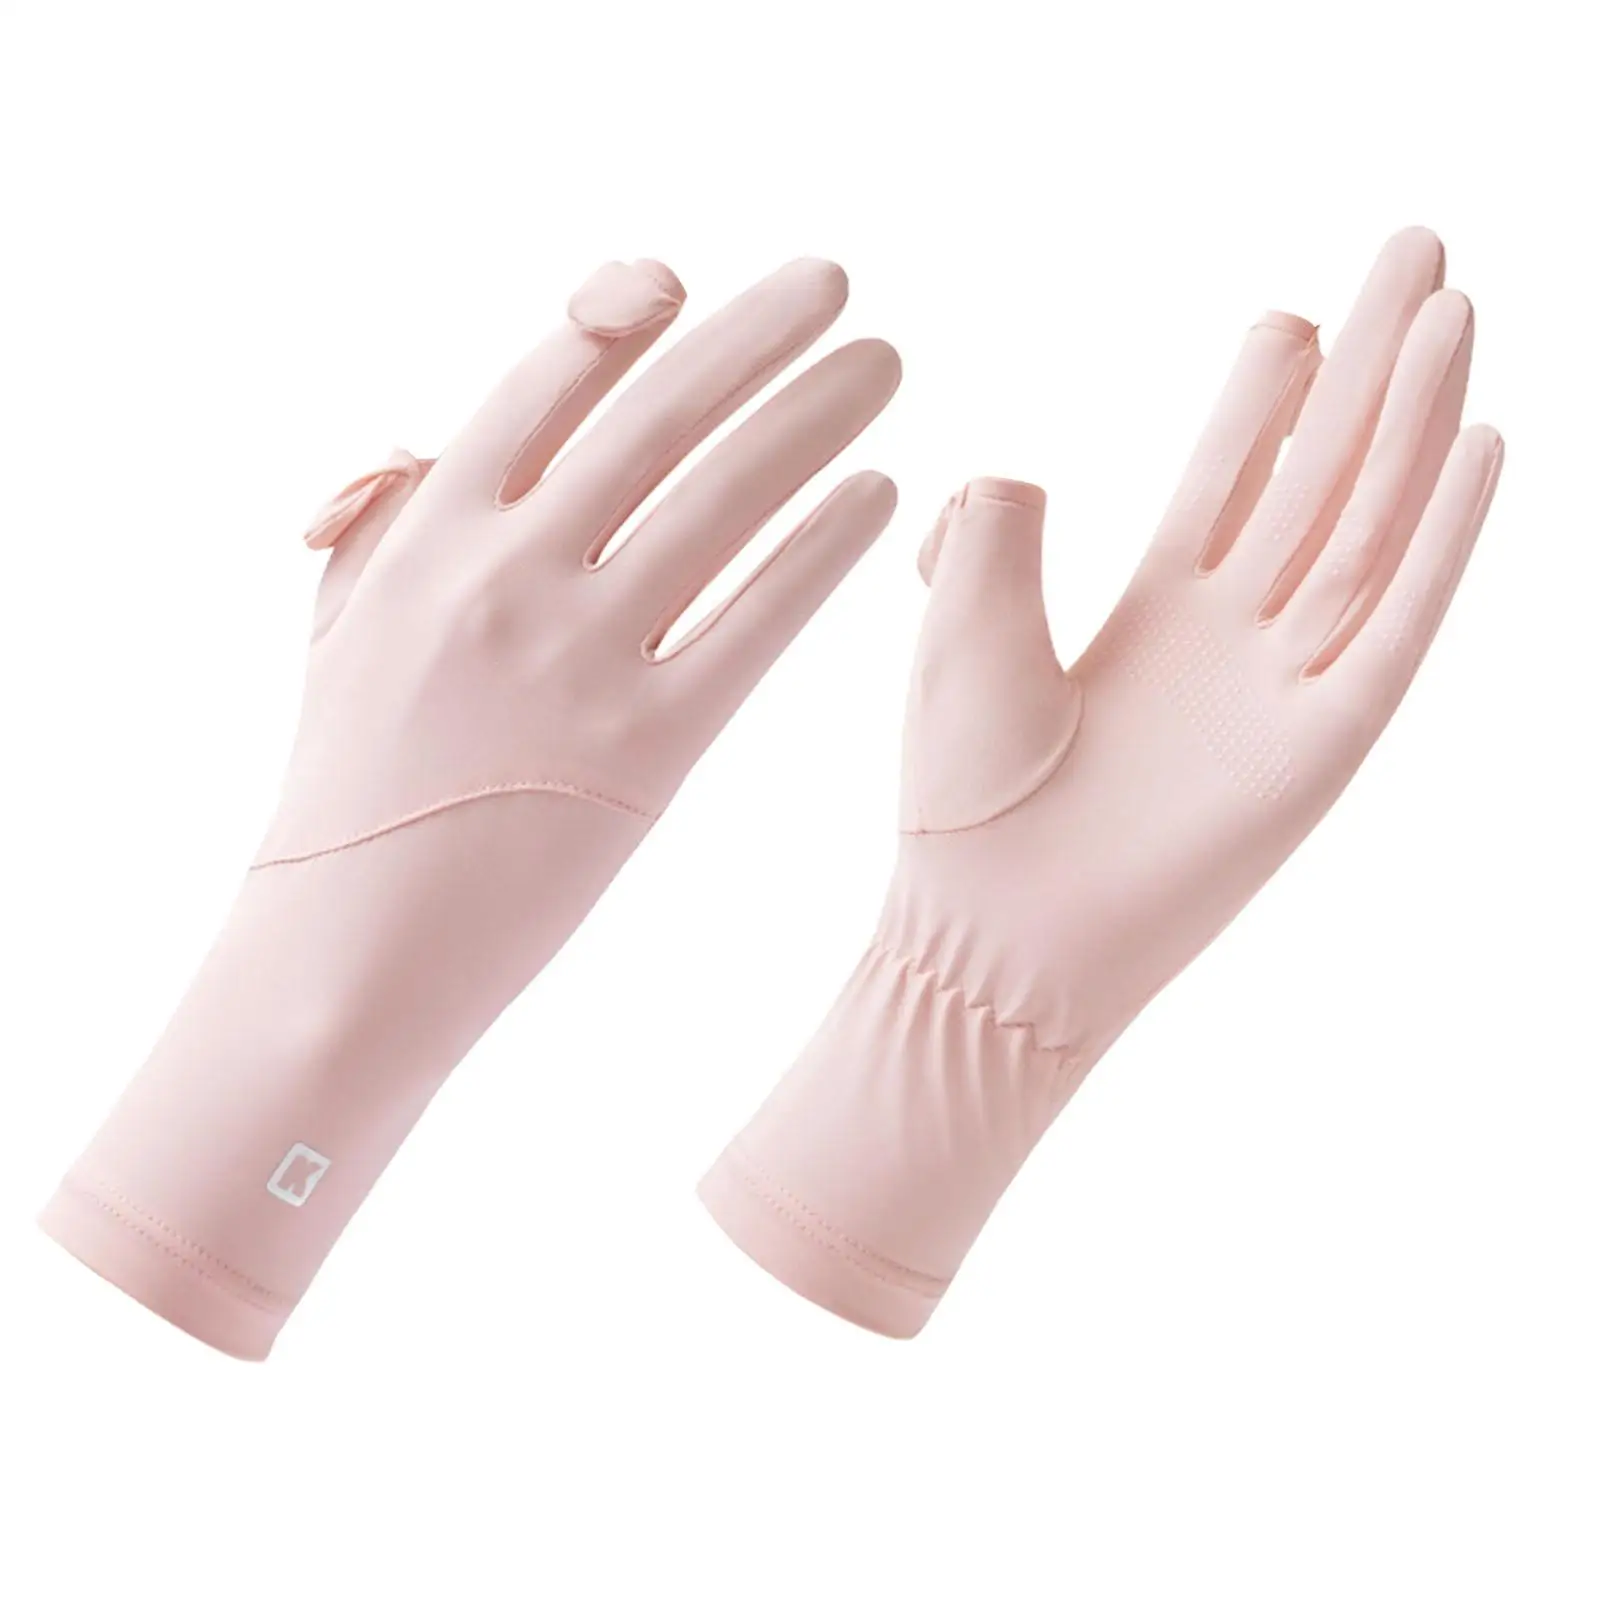 Sun Protection Gloves for Women Summer Sunblock Gloves for Golf Beach Riding